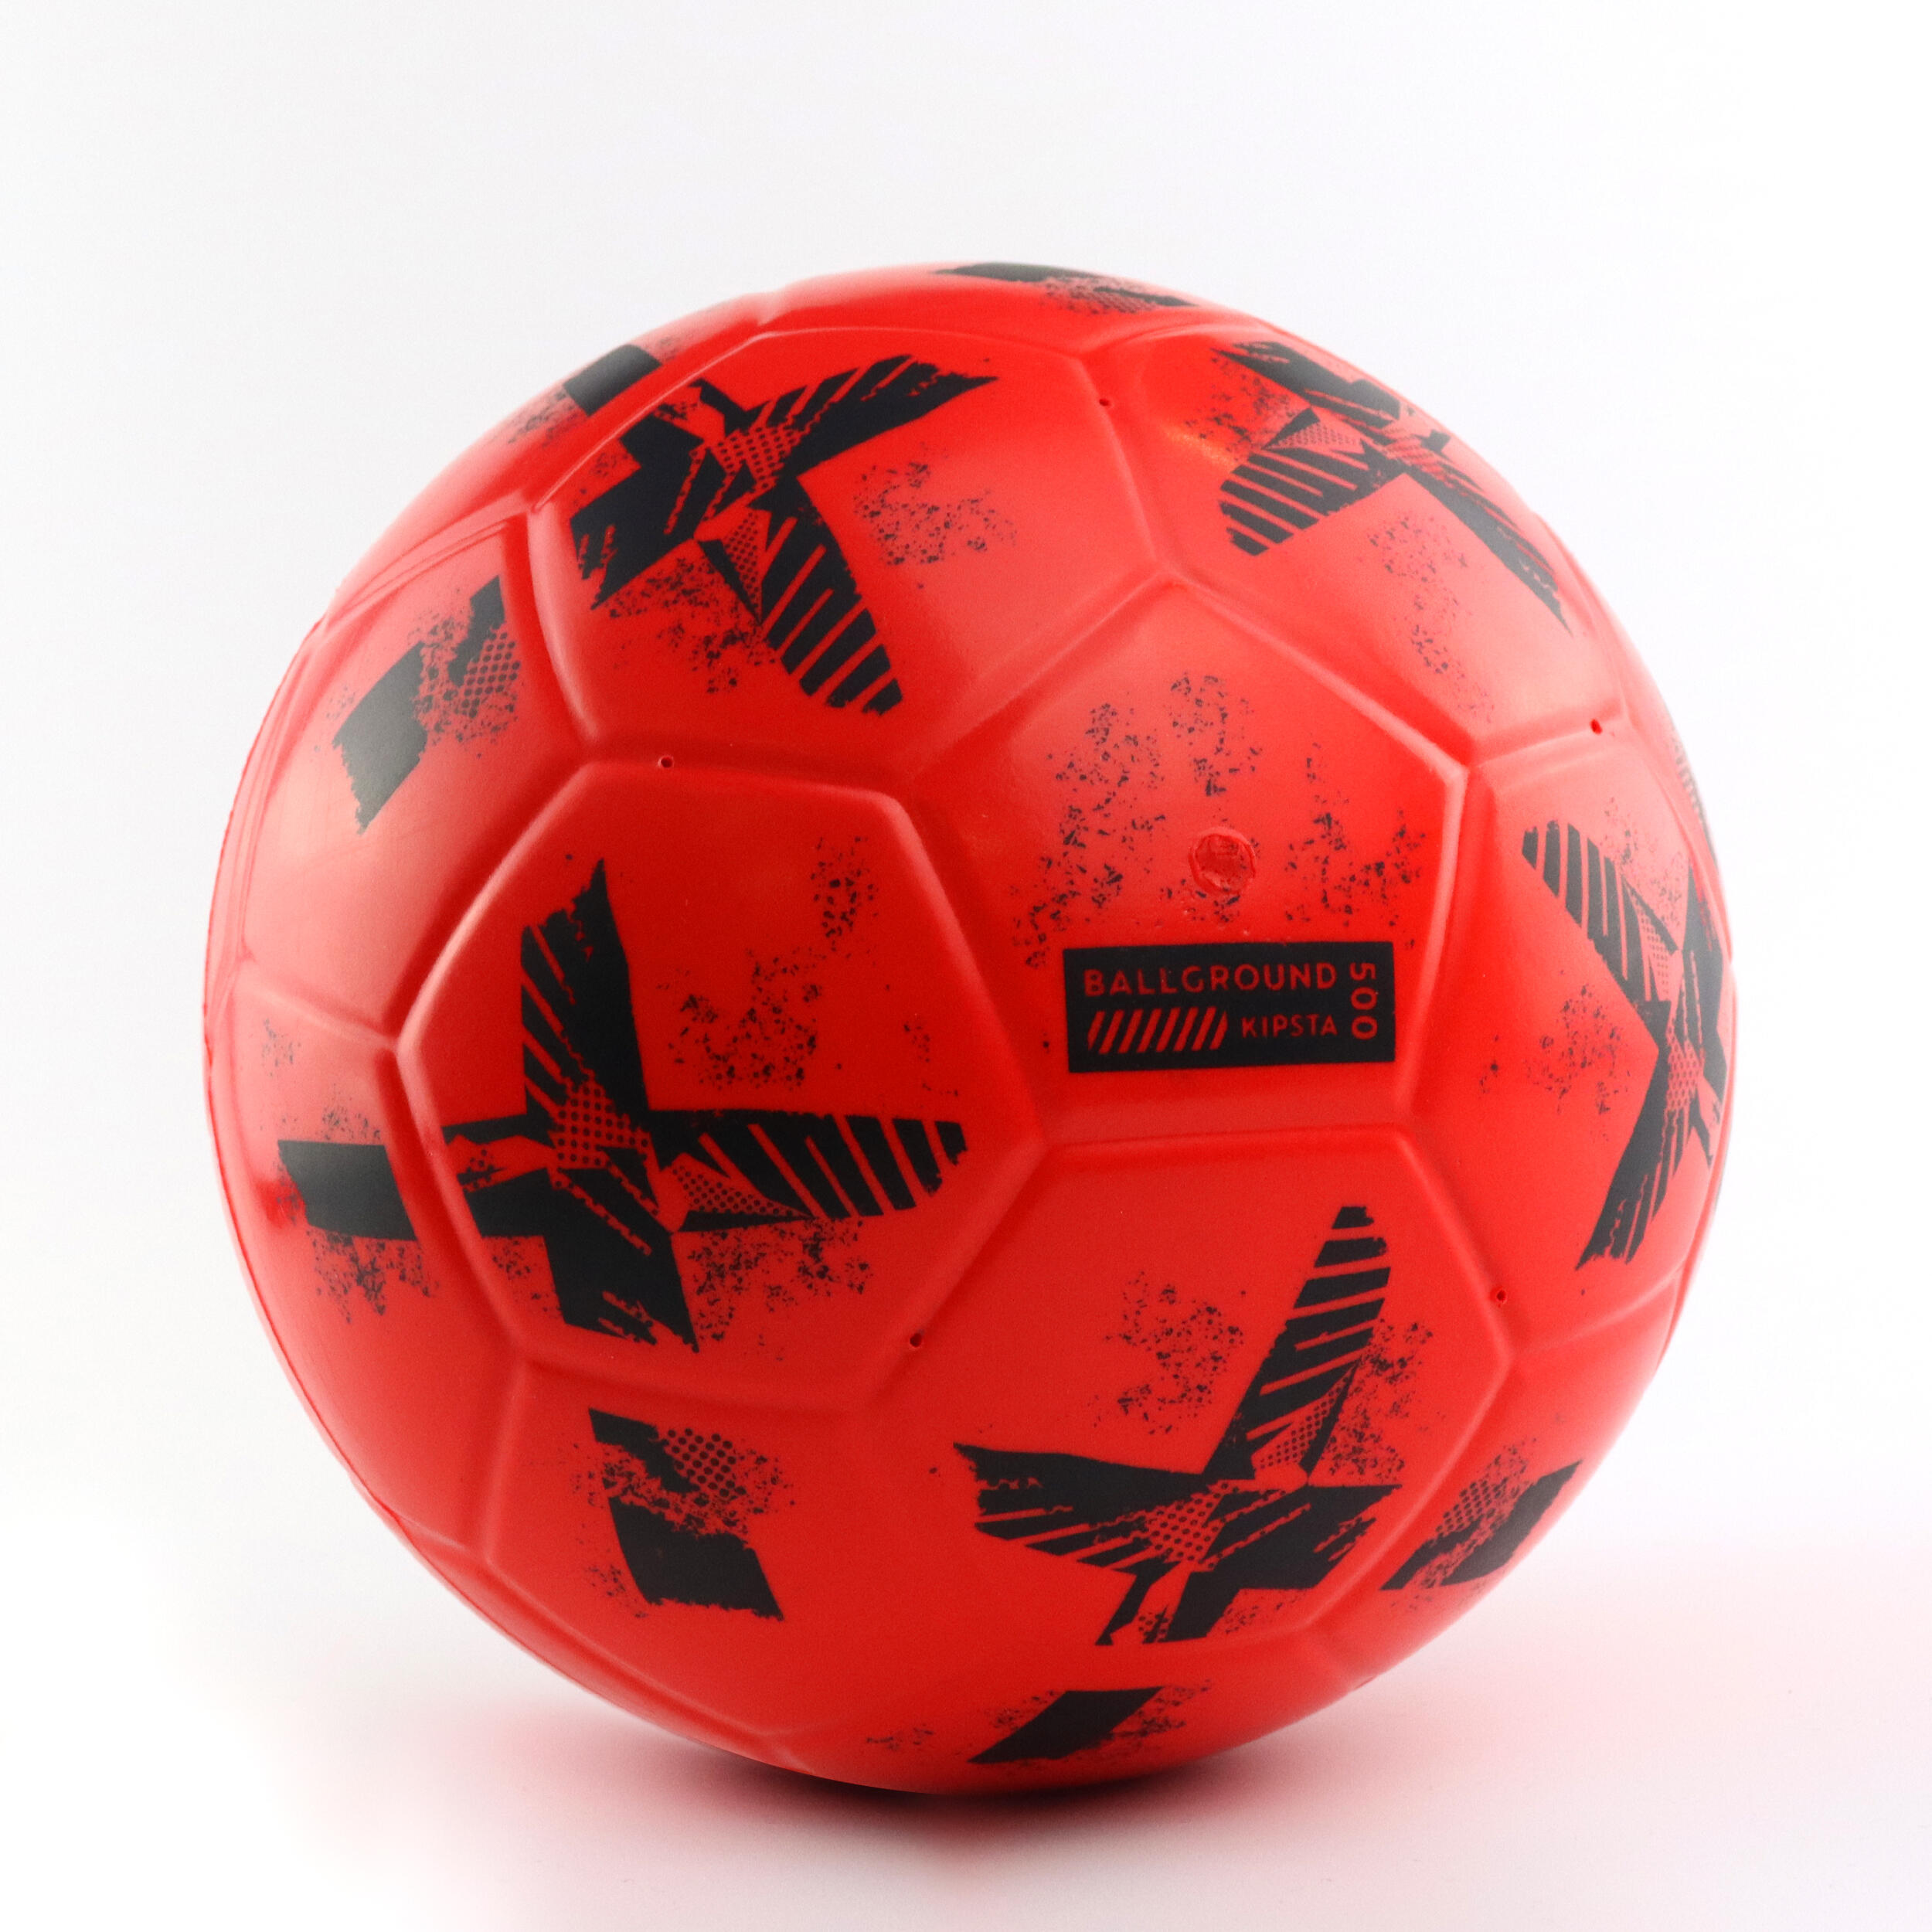 Foam Football S4 Ballground 500 - Red/Black 2/6